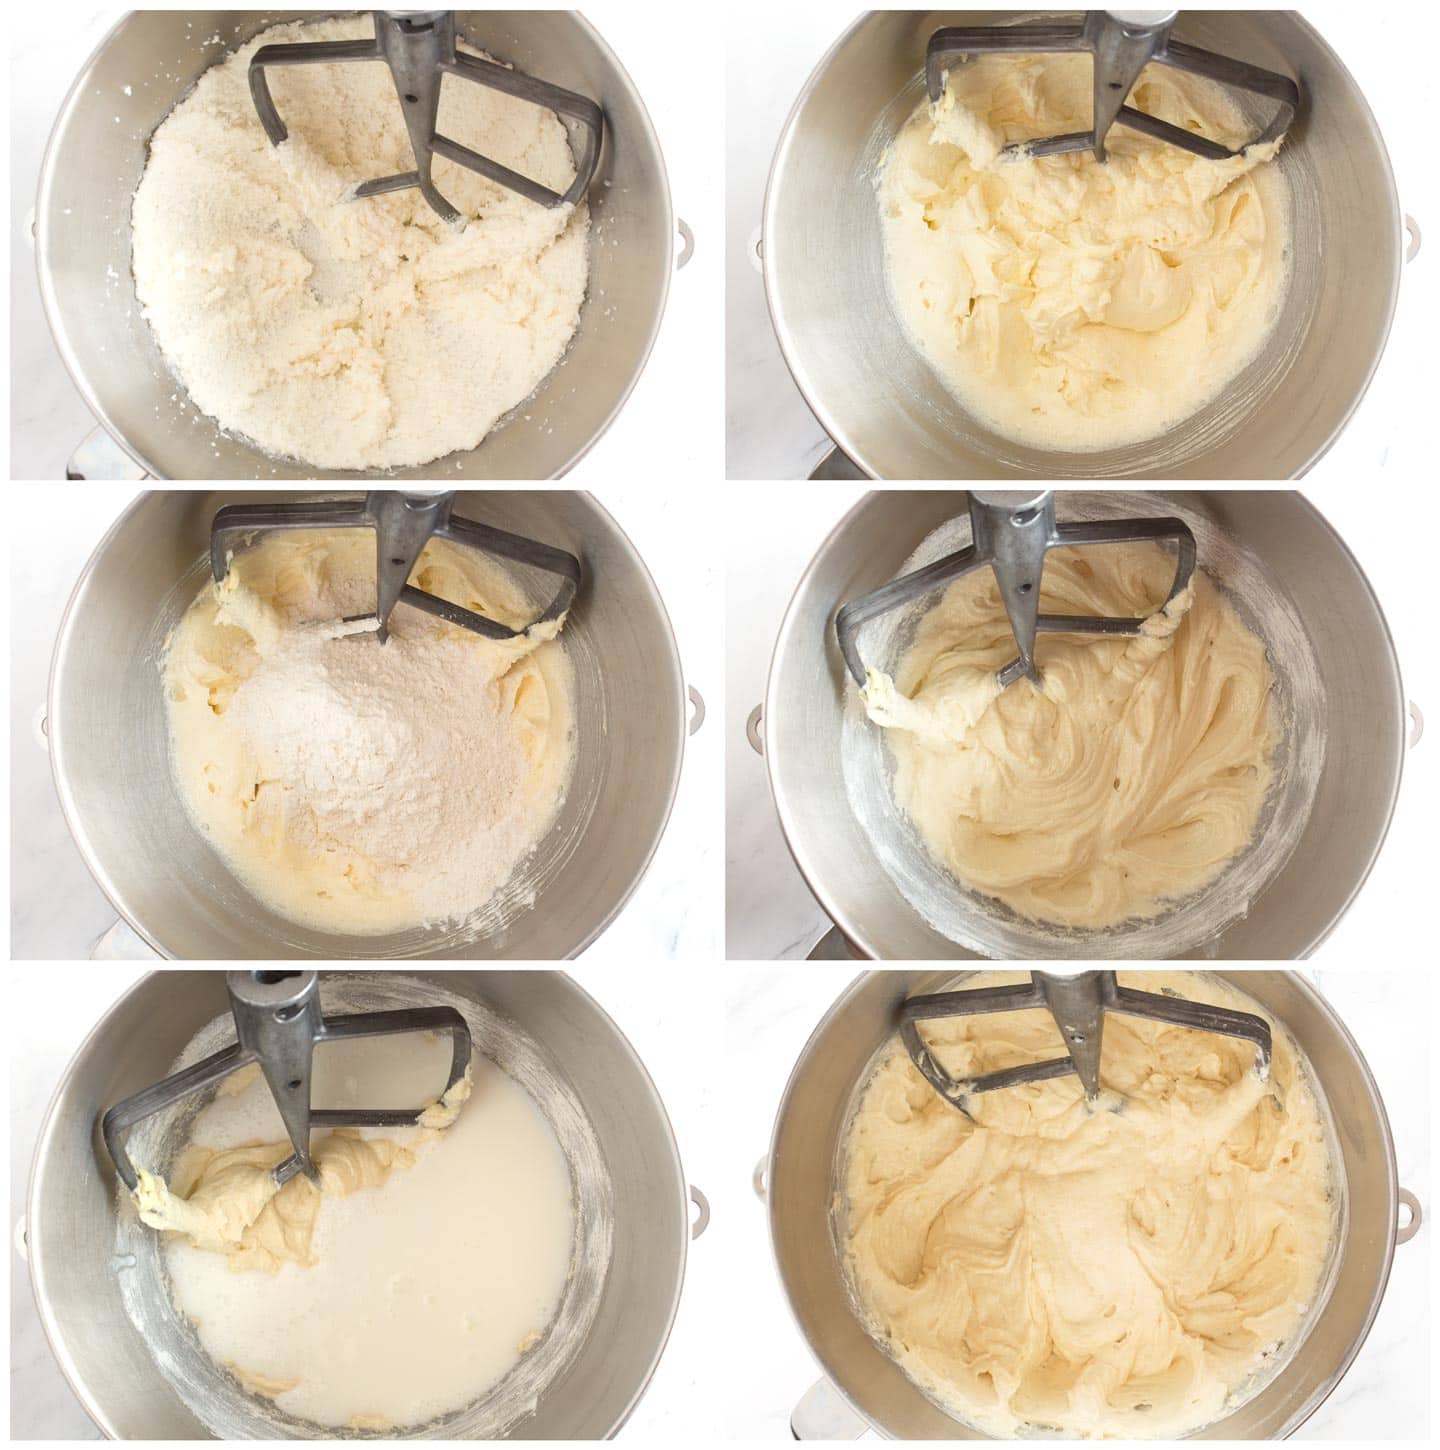 6 steps to make buttermilk cake batter.